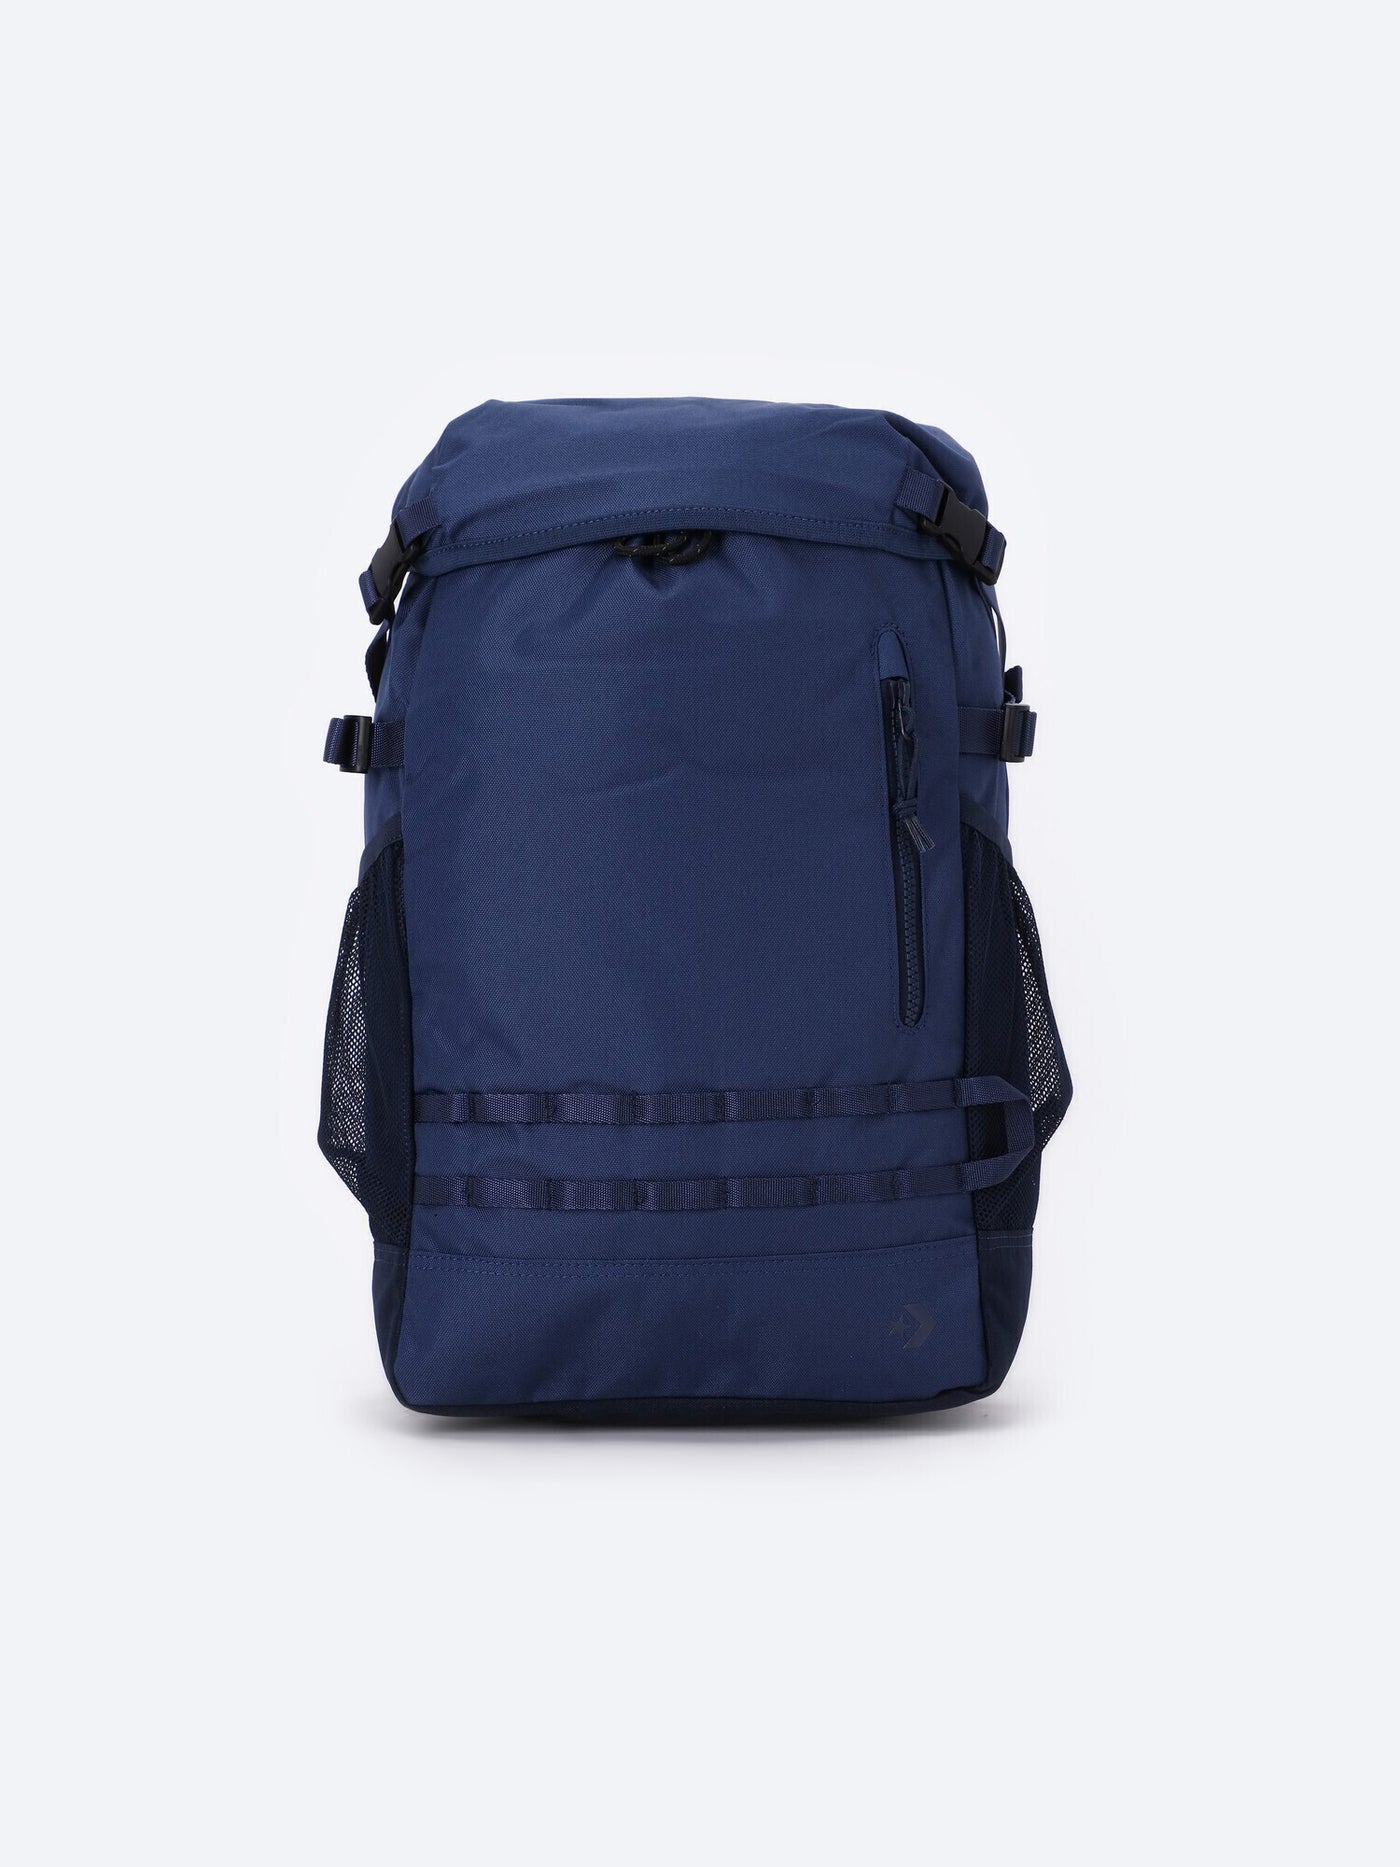 Converse Unisex Toploader Backpack - 10008276-a02